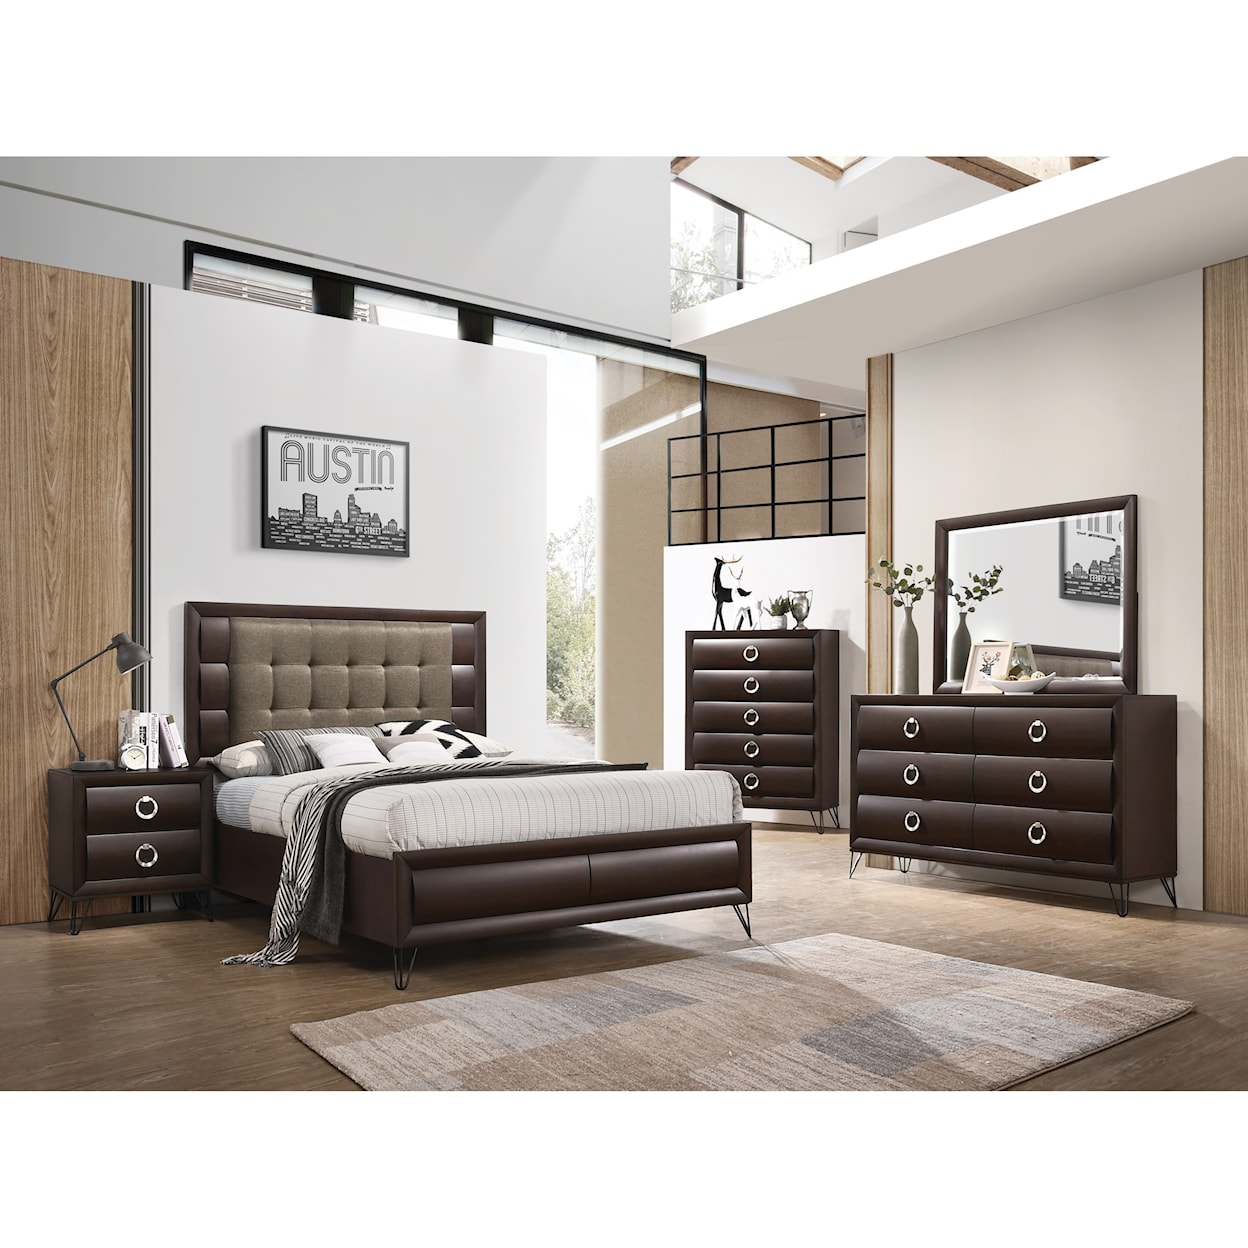 Acme Furniture Tablita King Bedroom Group